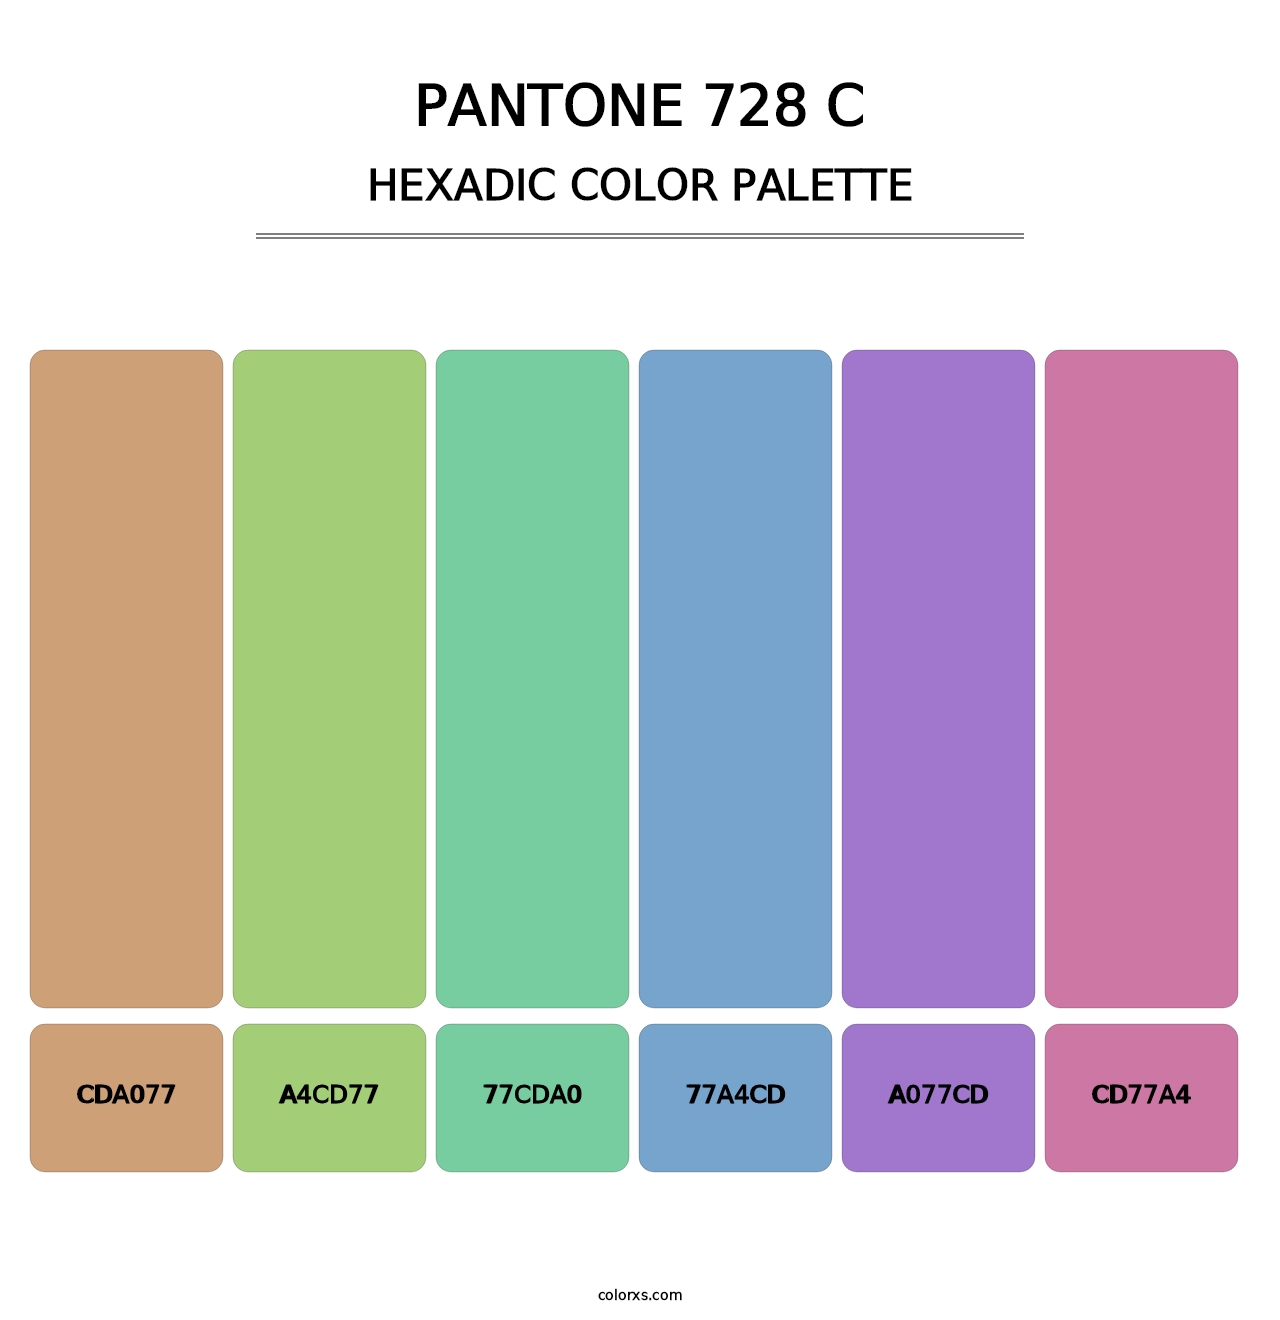 PANTONE 728 C - Hexadic Color Palette